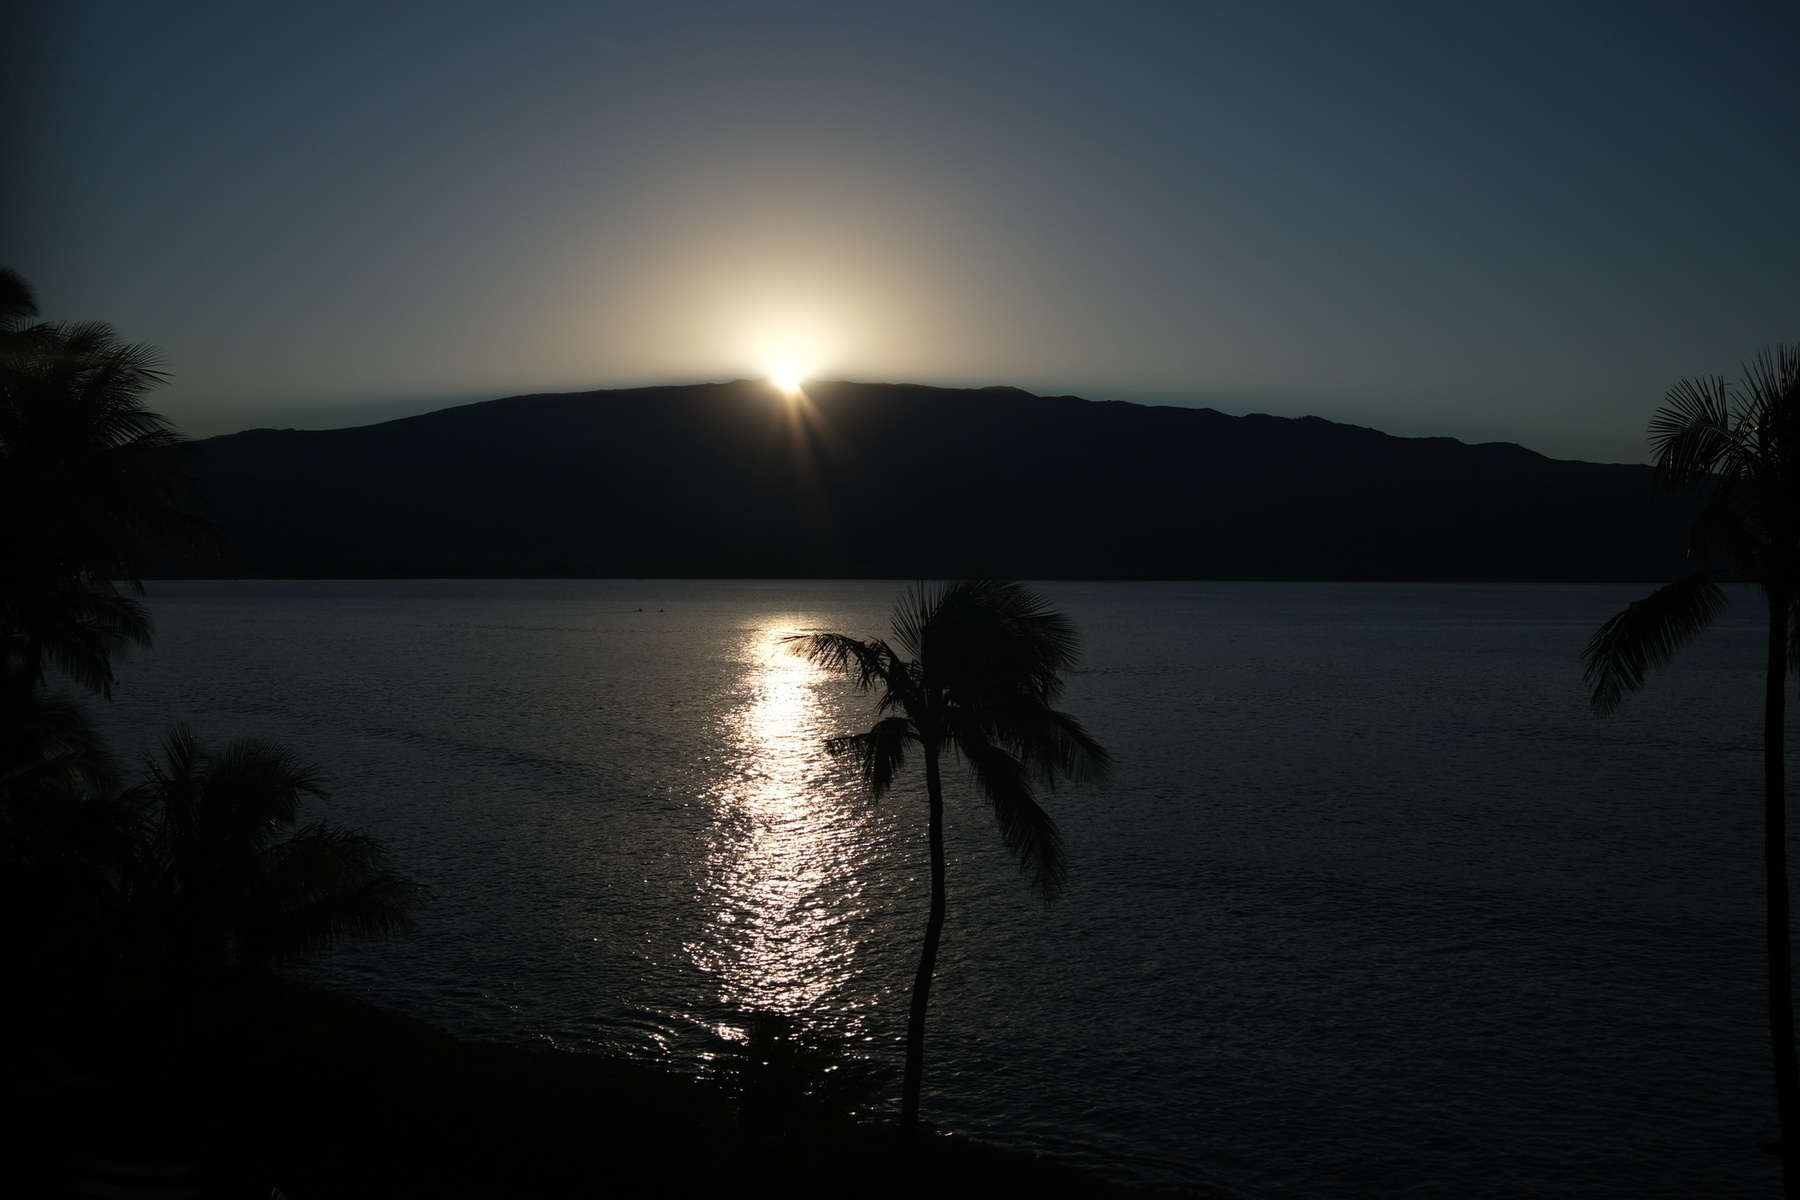 Sunrise just occurring at a silohetted Haleakala, a sudden mova of brightness.